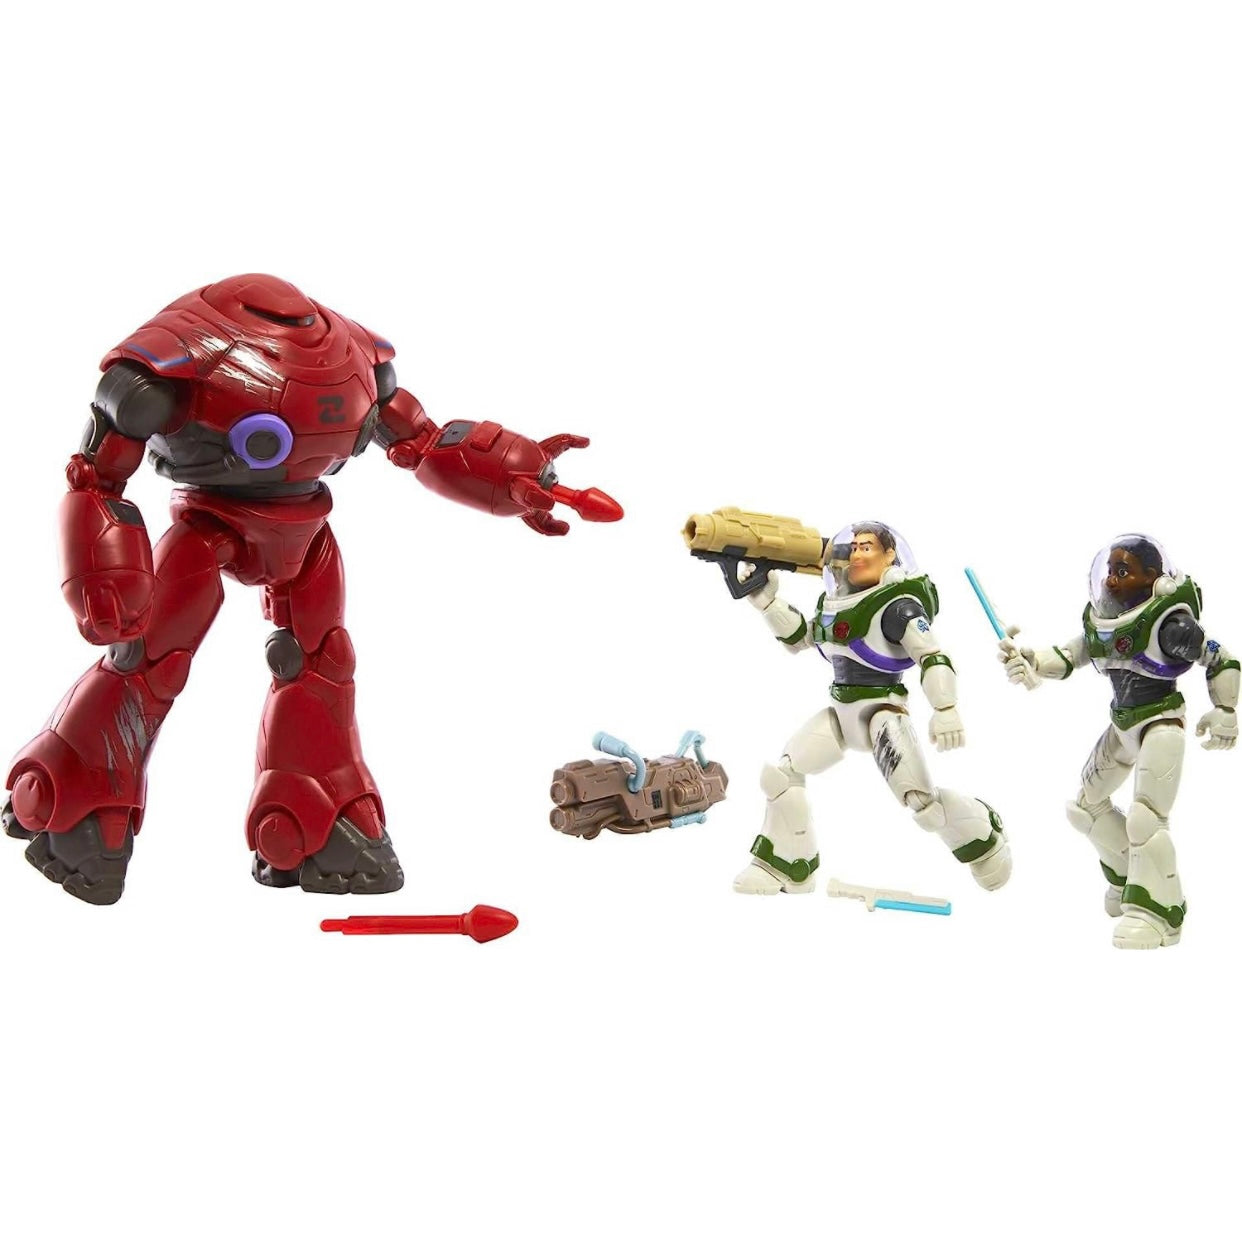 Disney and Pixar Lightyear 3 Action Figure Set, 5-in Scale Buzz Lightyear, Izzy Hawthorne & Zyclops Toys, Space Rangers vs Robots